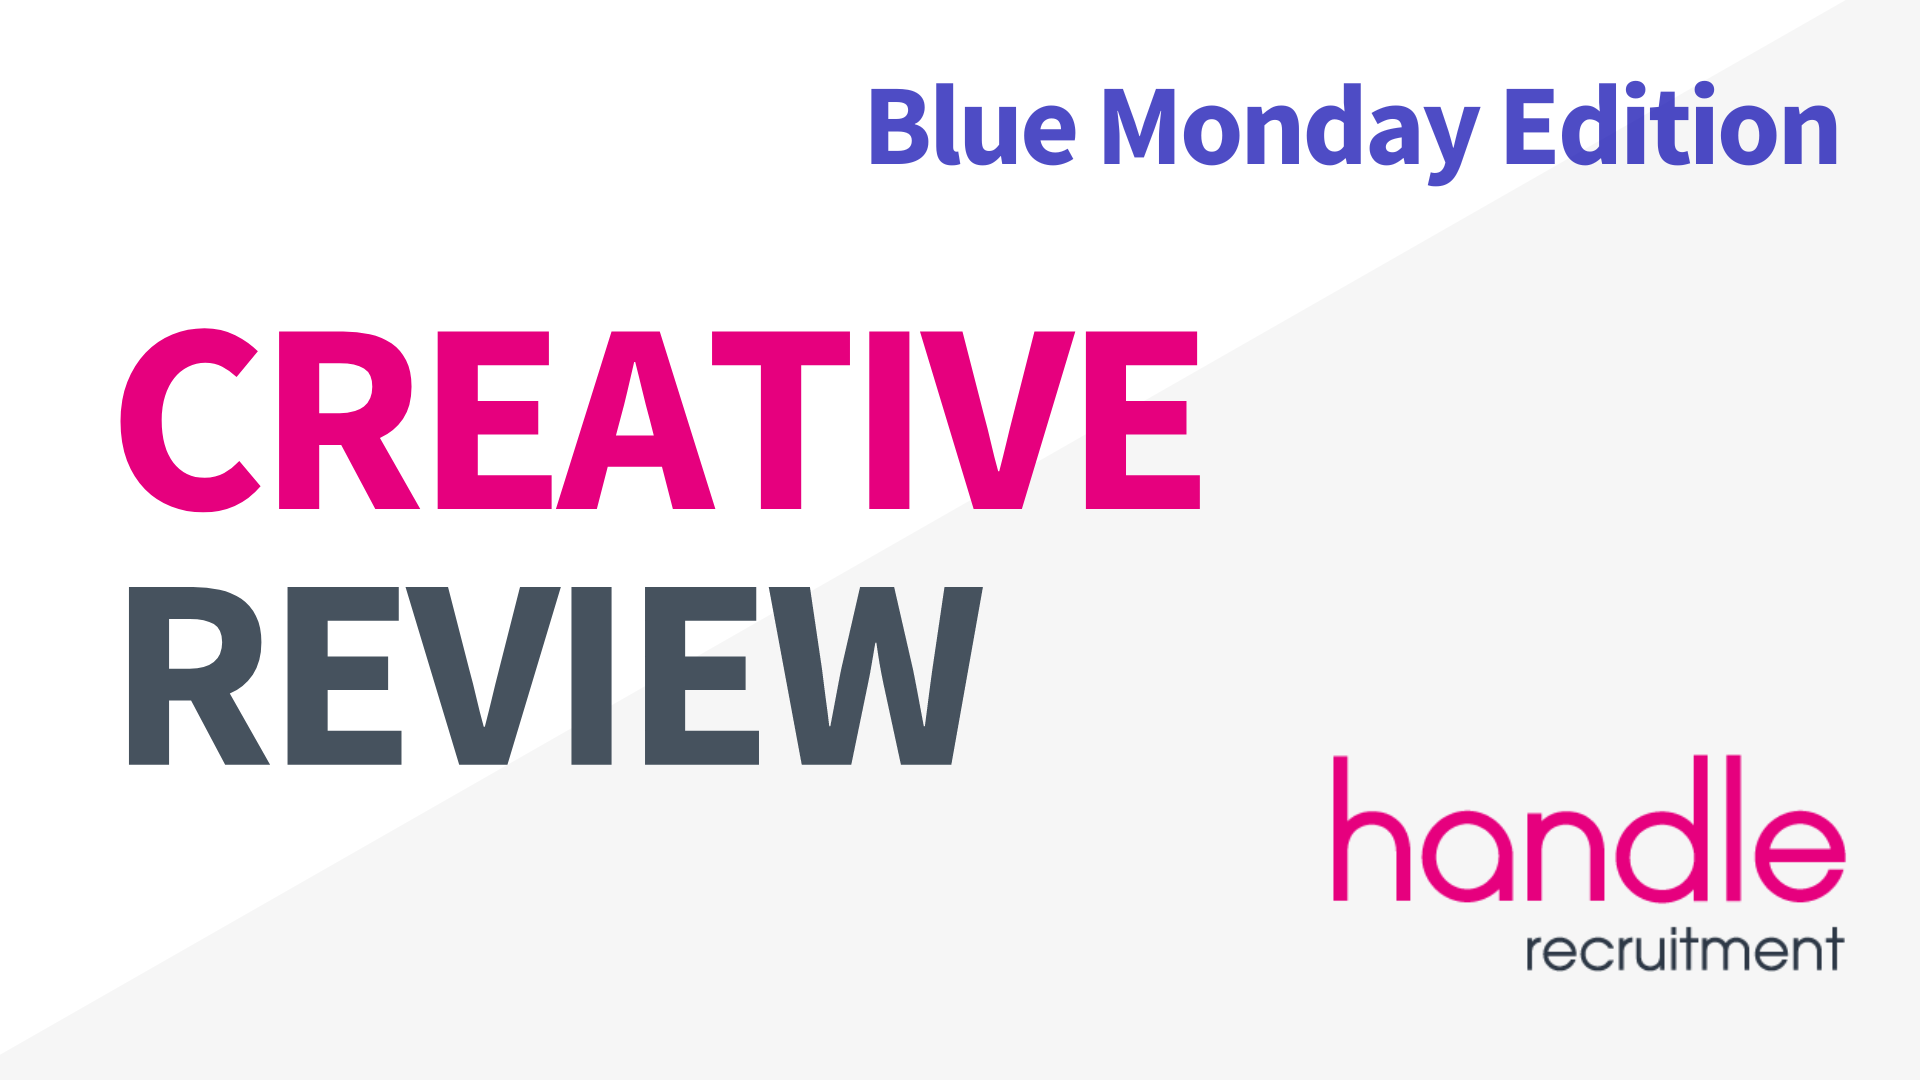 Creative Review Blue Monday Edition - Handle Recruitment